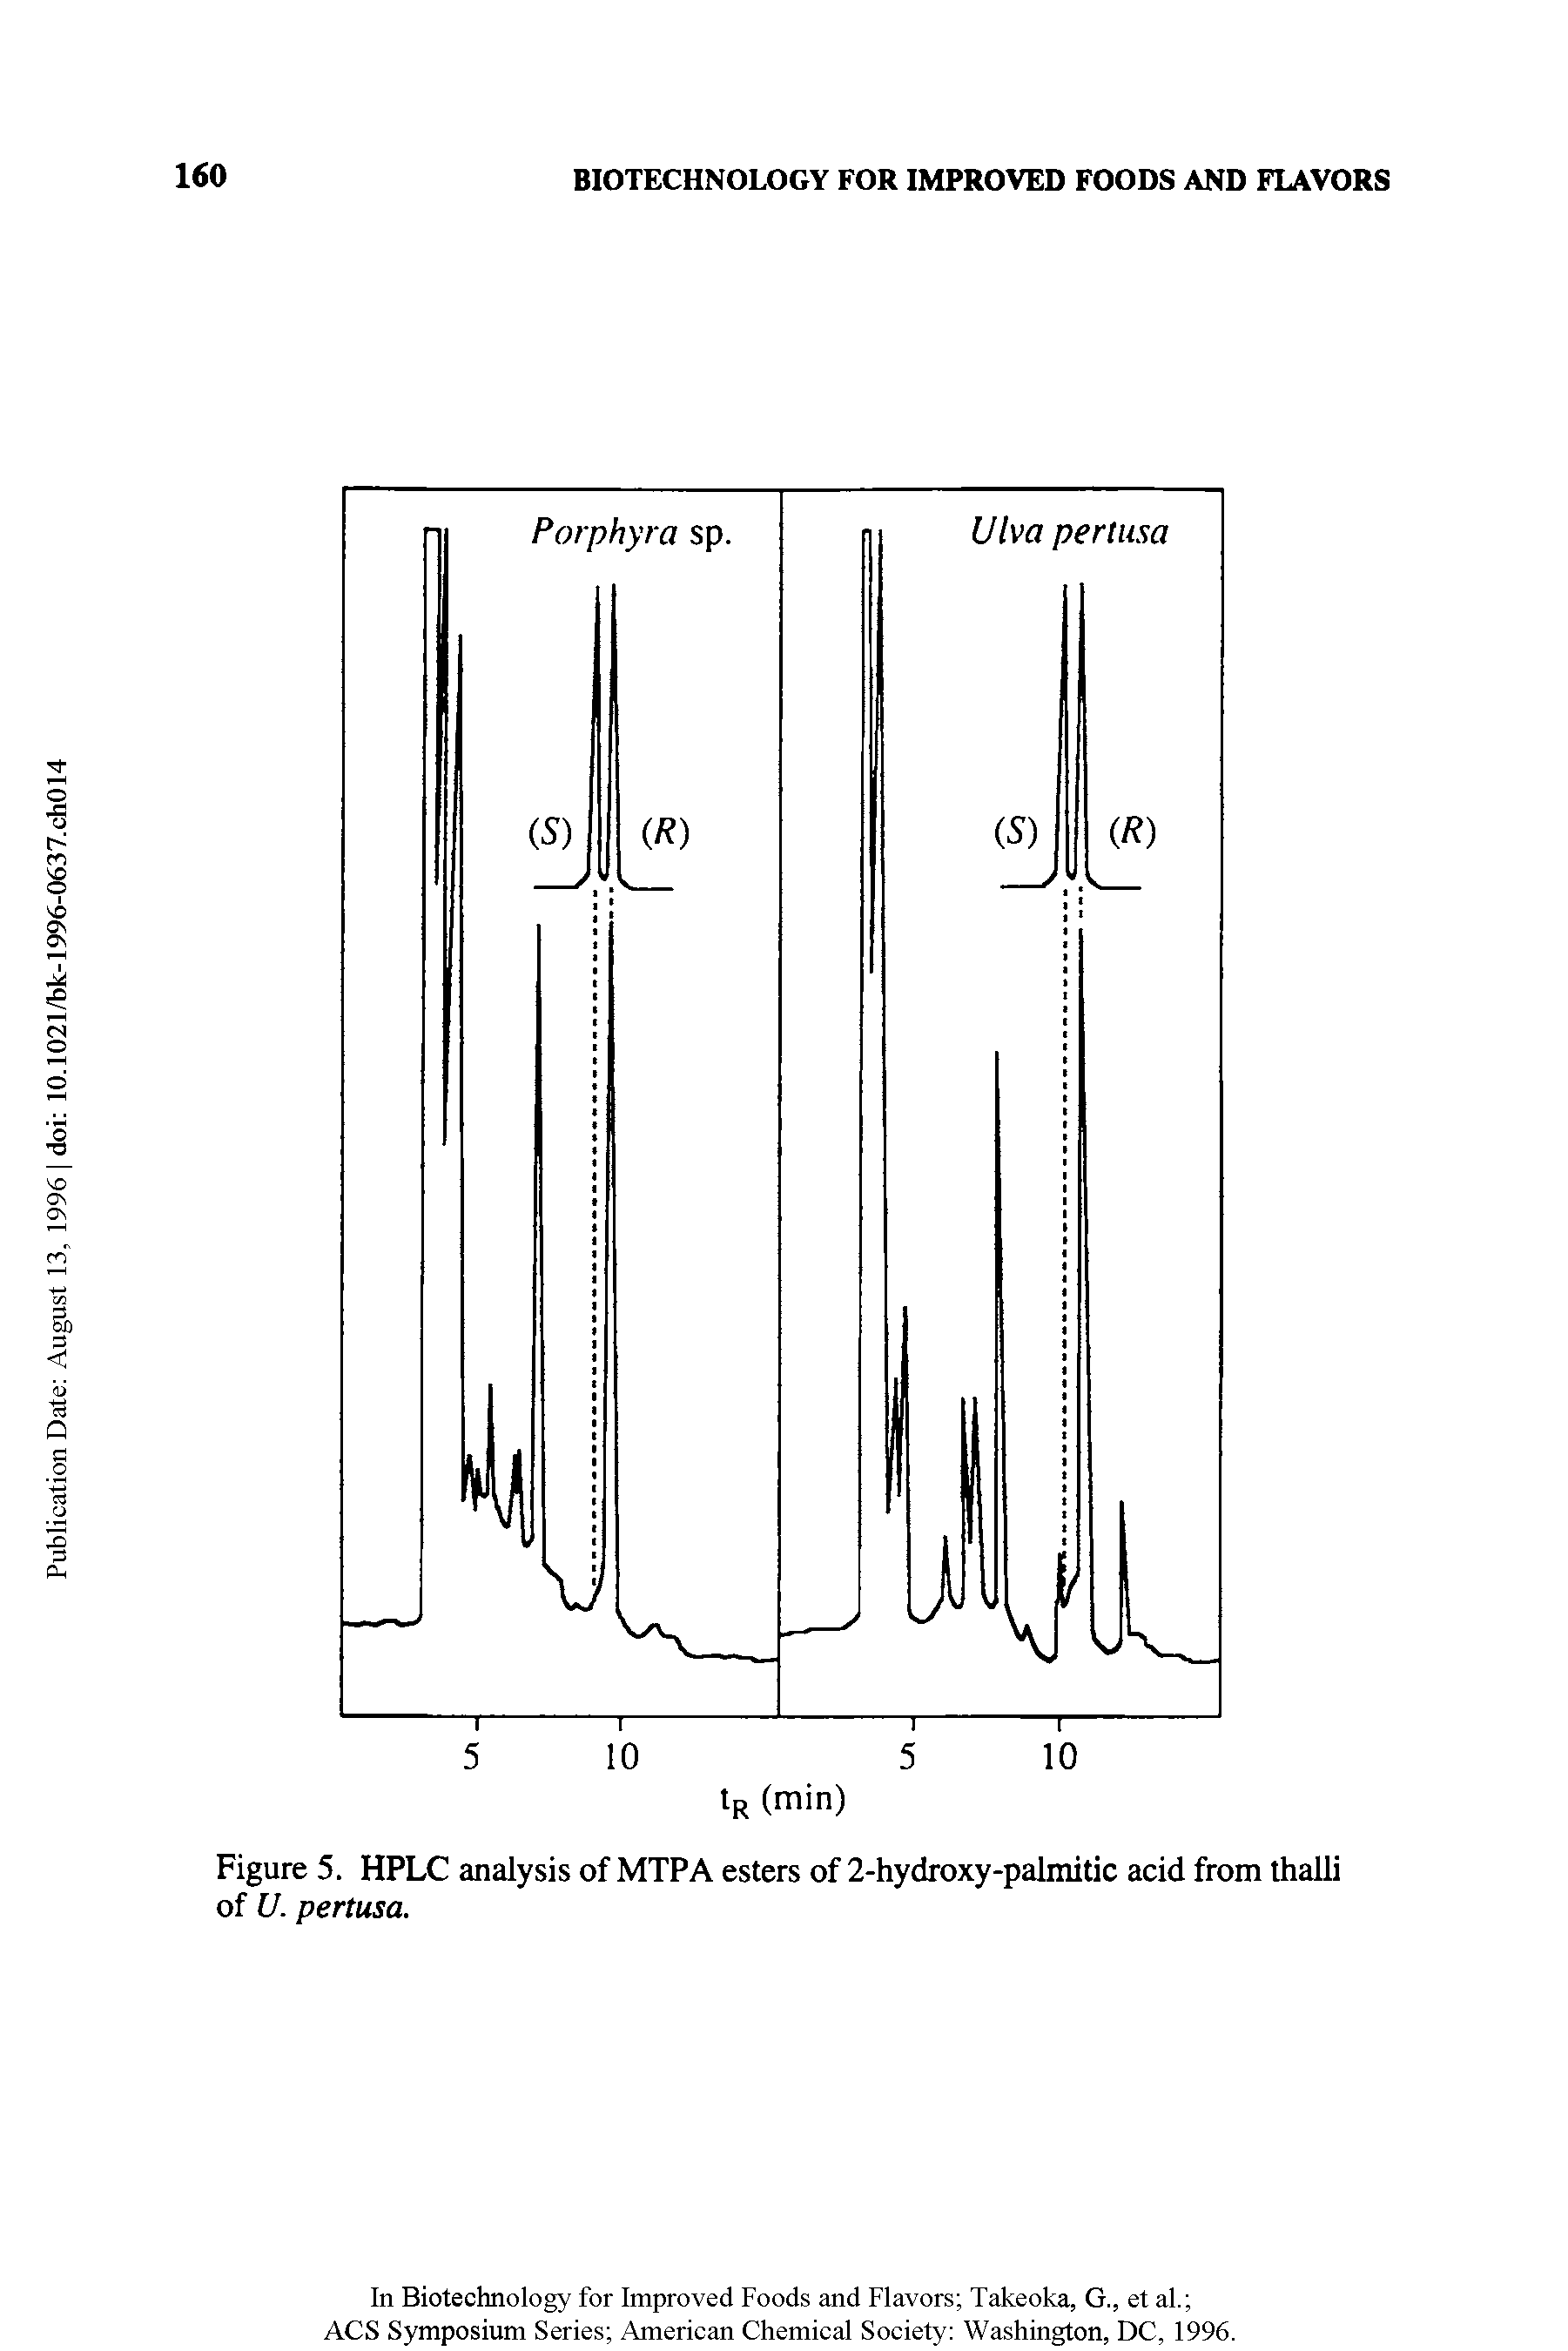 Figure 5. HPLC analysis of MTPA esters of 2-hydroxy-palmitic acid from thalli of U. pertusa.